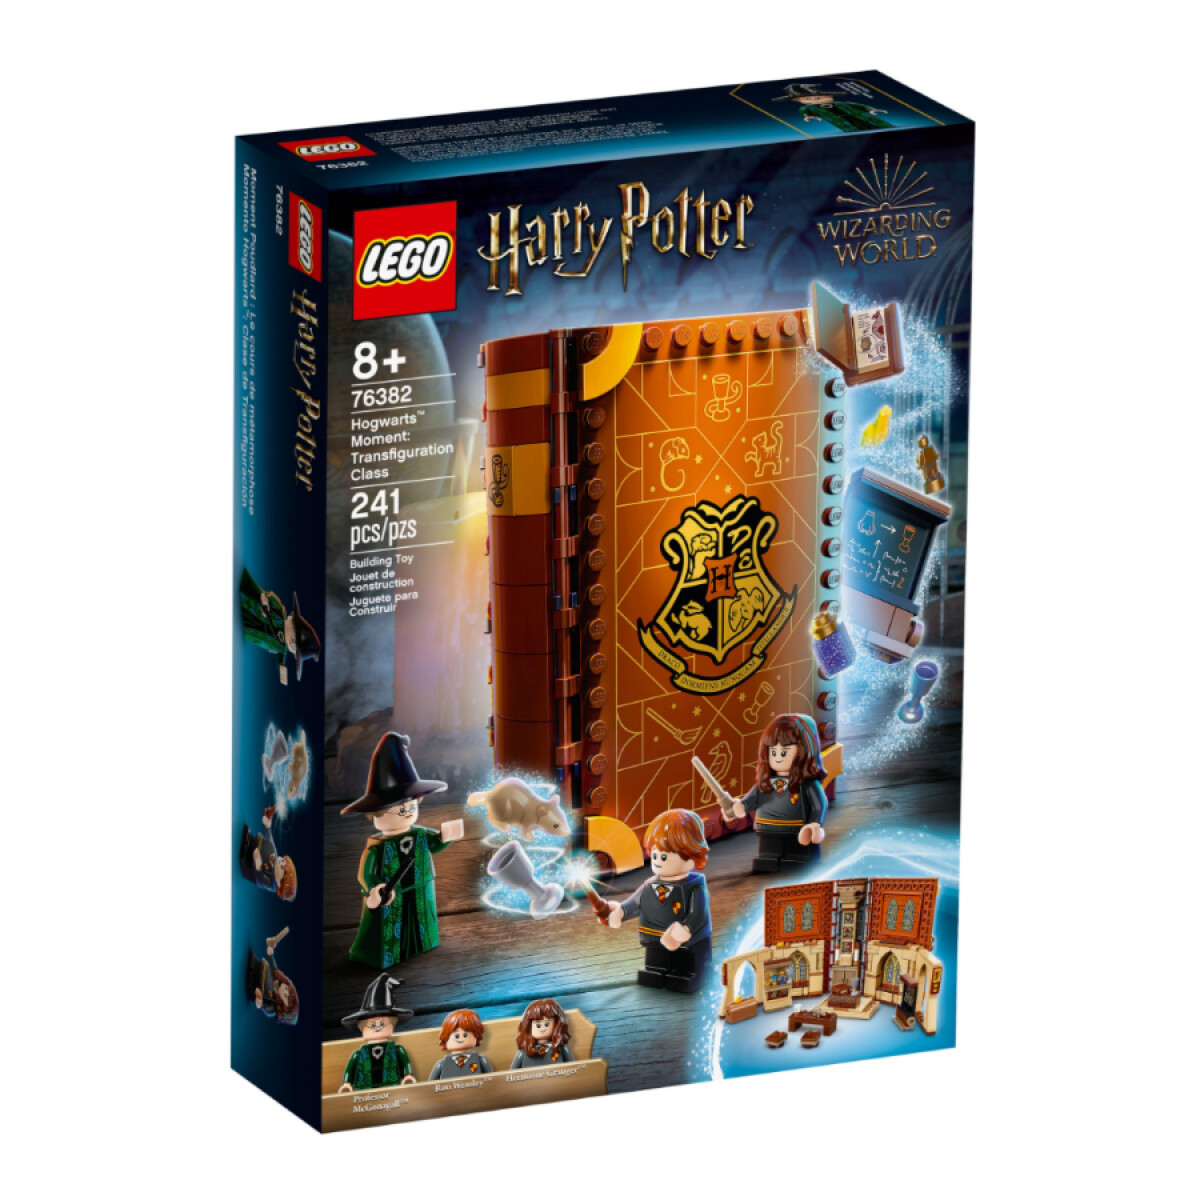 Lego Harry Potter Transfiguration Class - 76382 